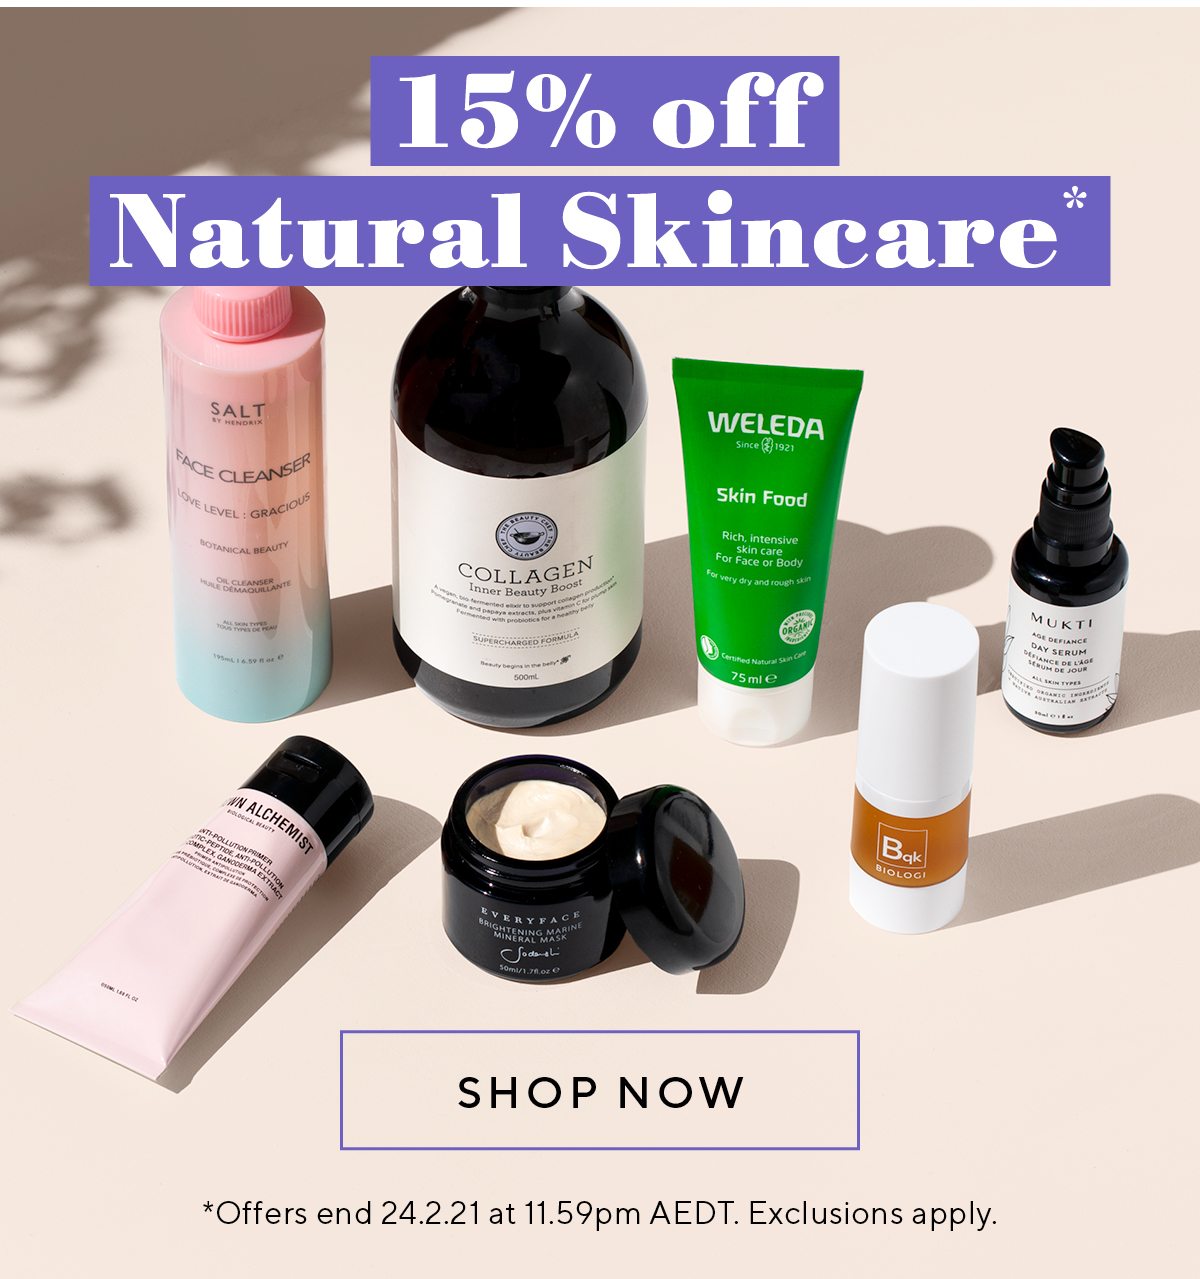 15% off natural skincare*